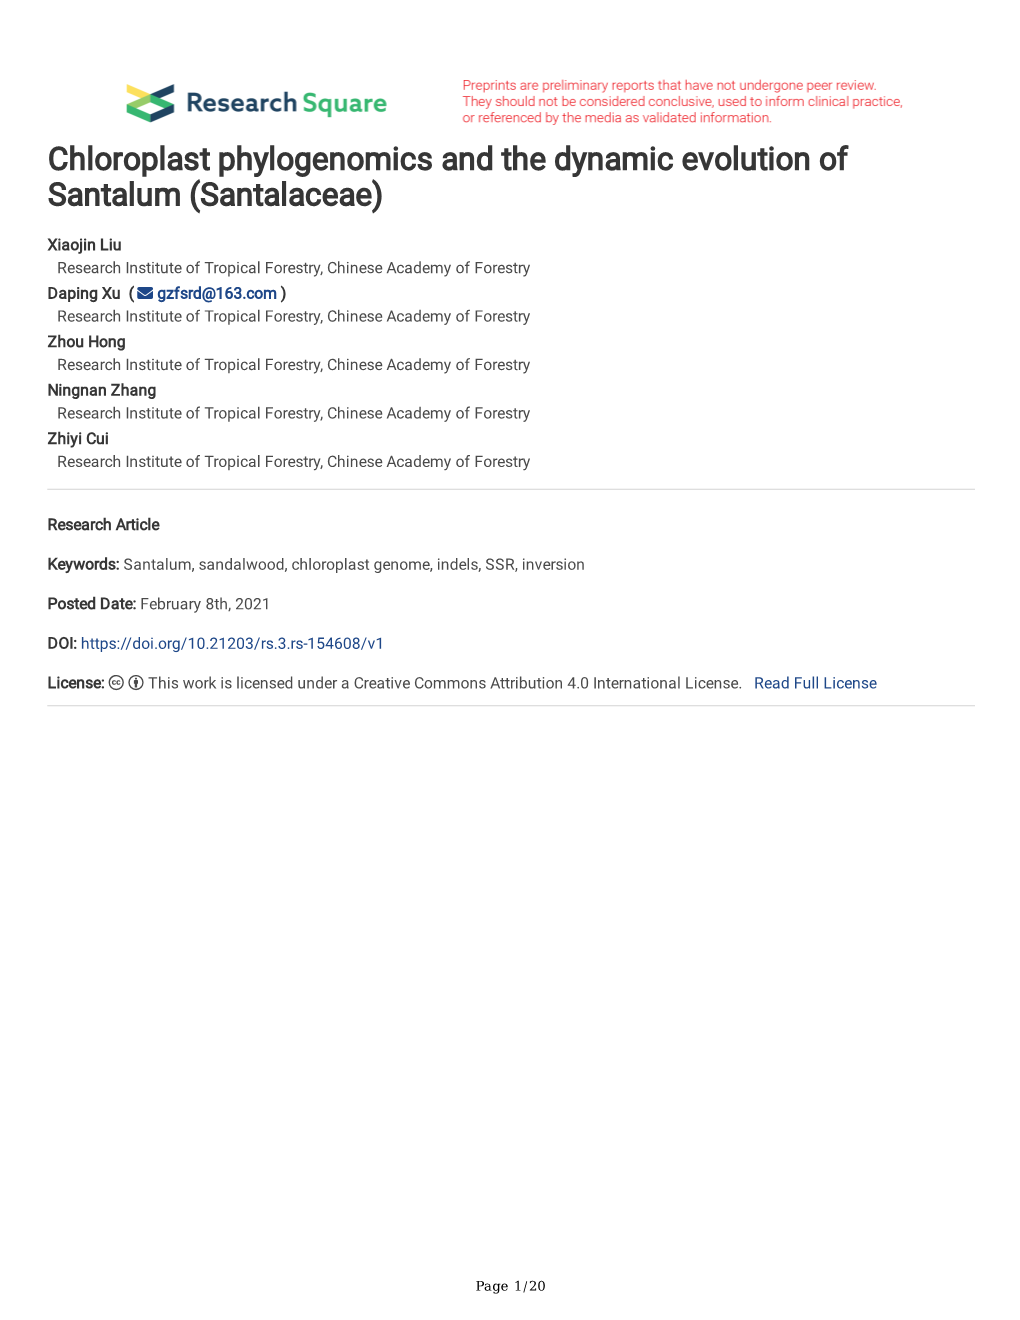 Chloroplast Phylogenomics and the Dynamic Evolution of Santalum (Santalaceae)